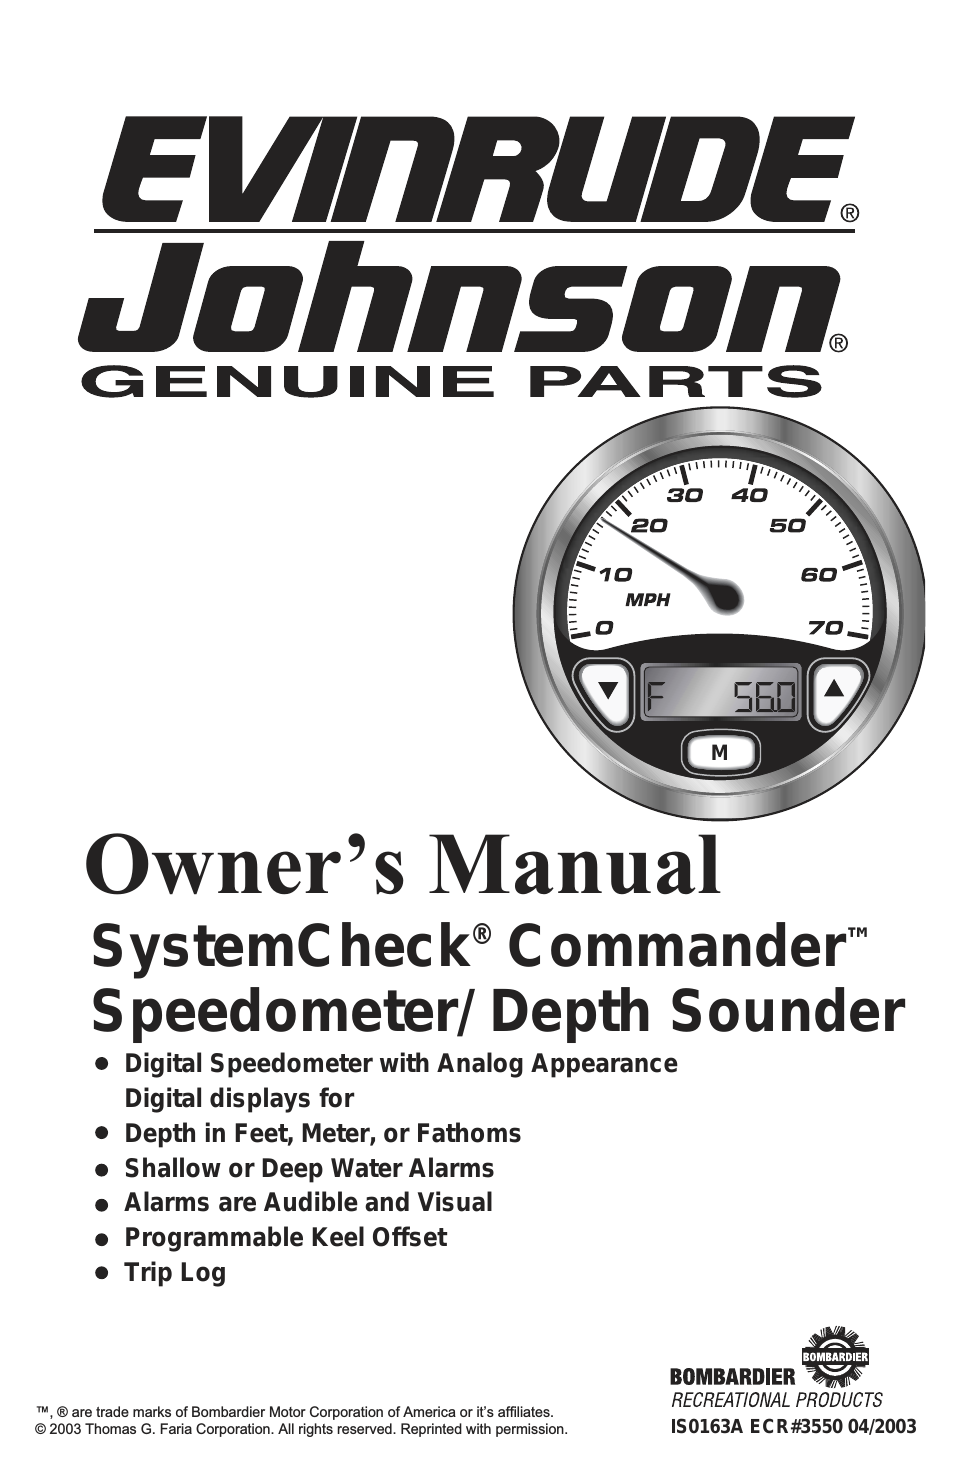 Speedometer/Depth Sounder